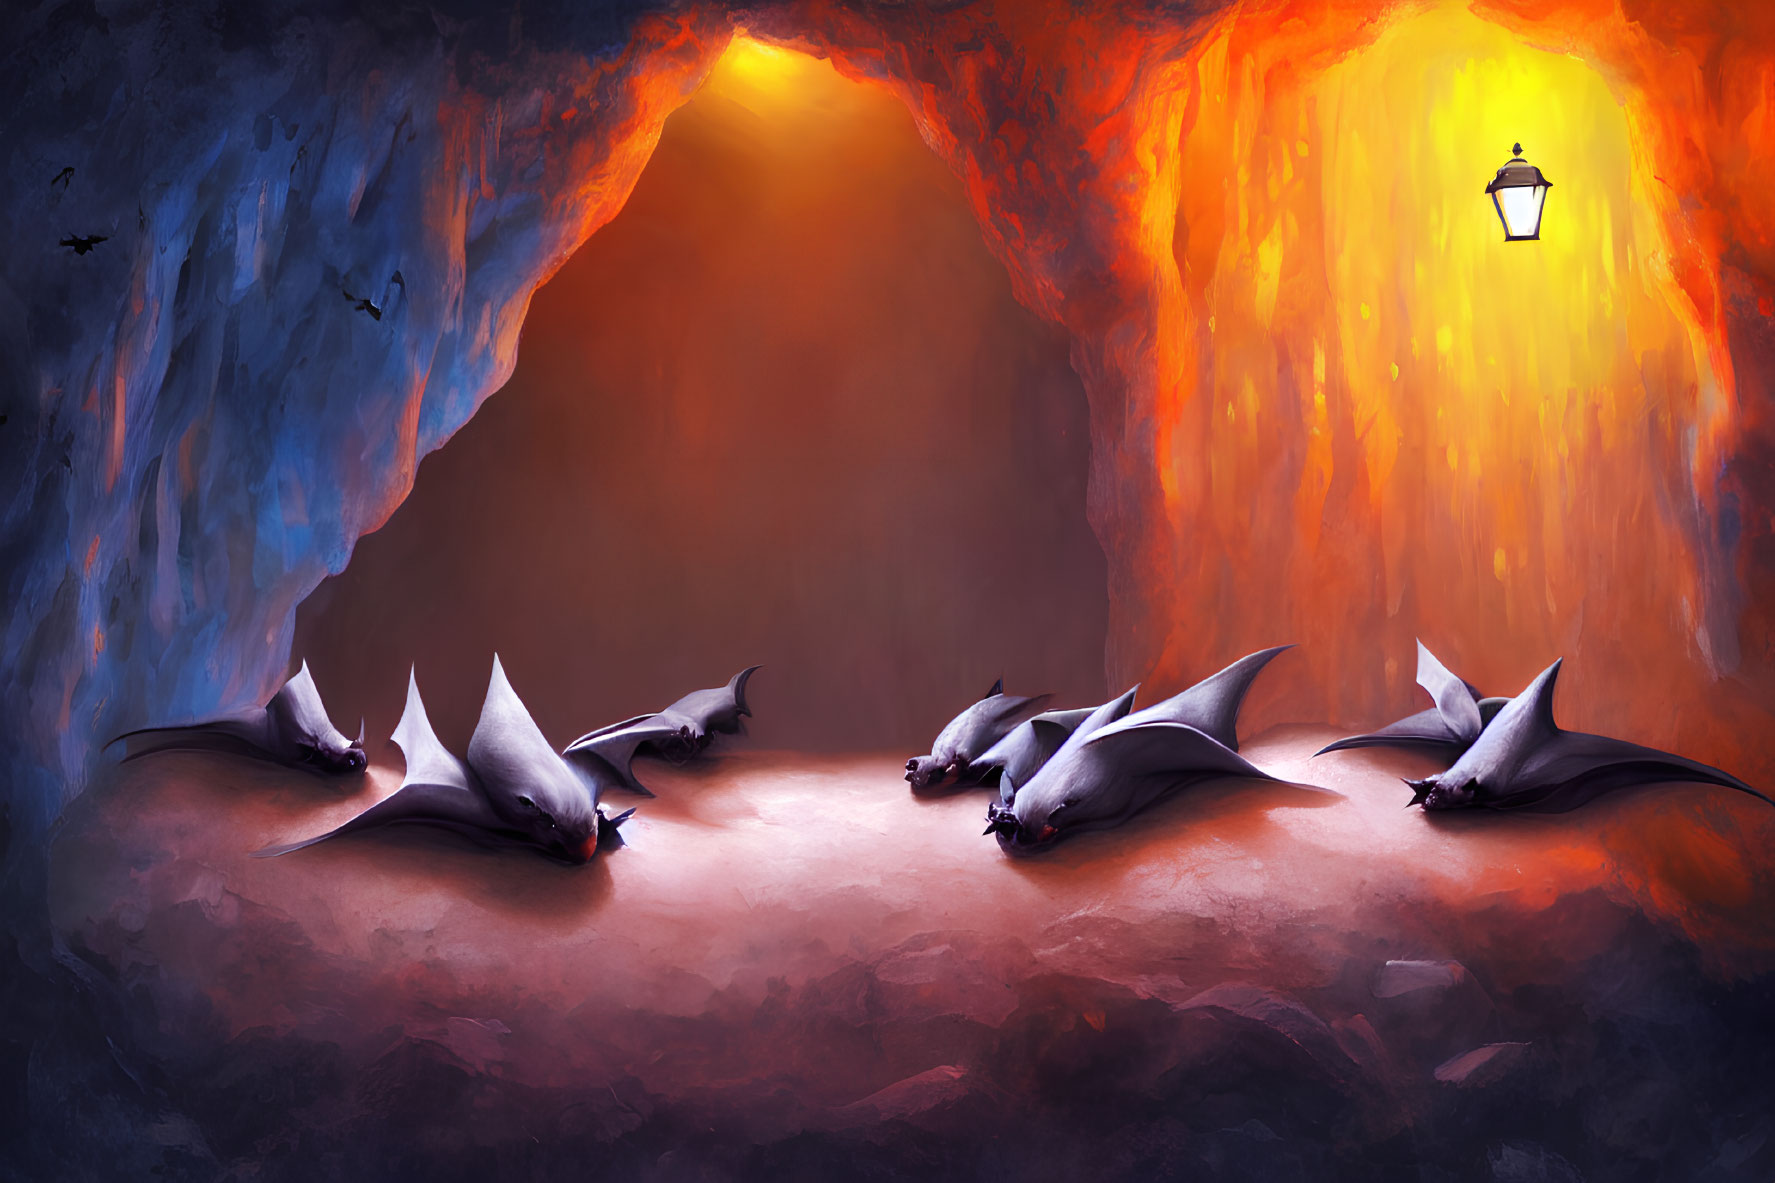 Mystical cavern with orange and blue glow, bats resting under lantern